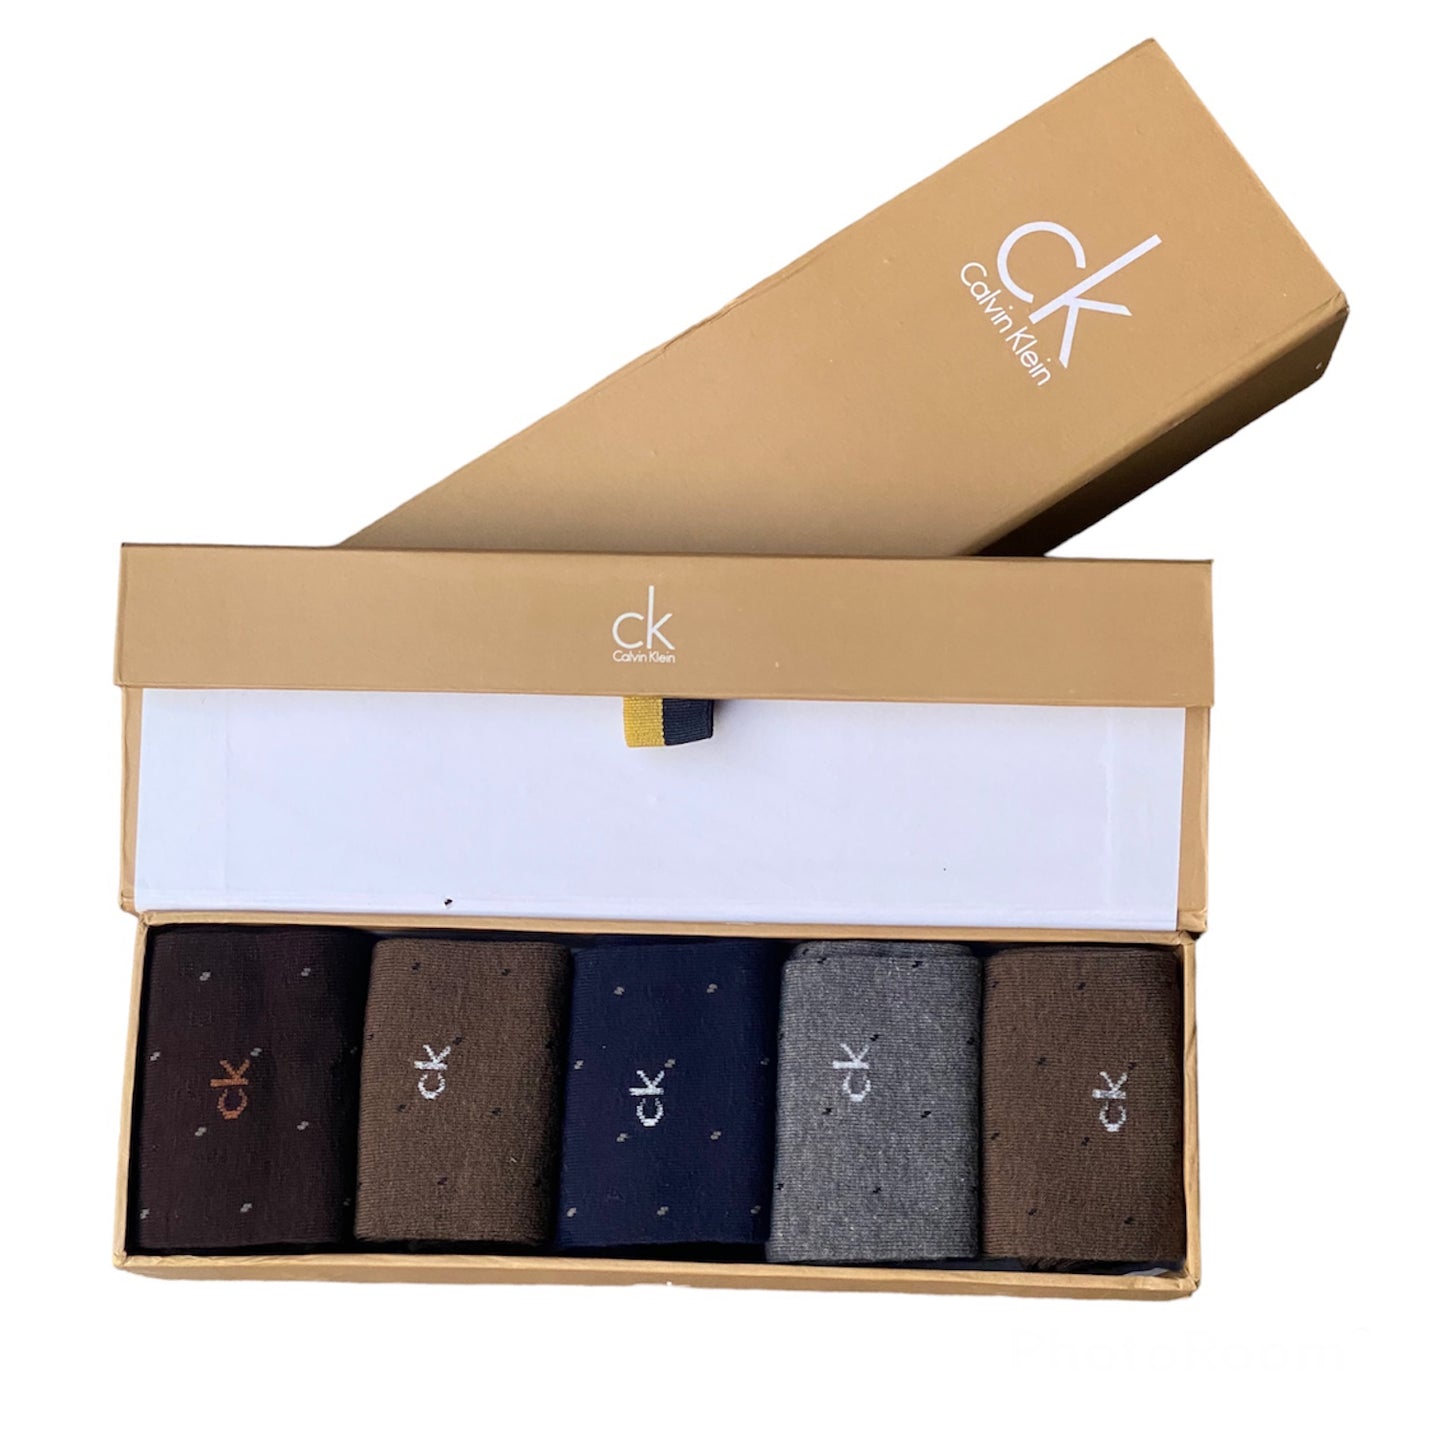 C-k pack of 5 premium quality socks